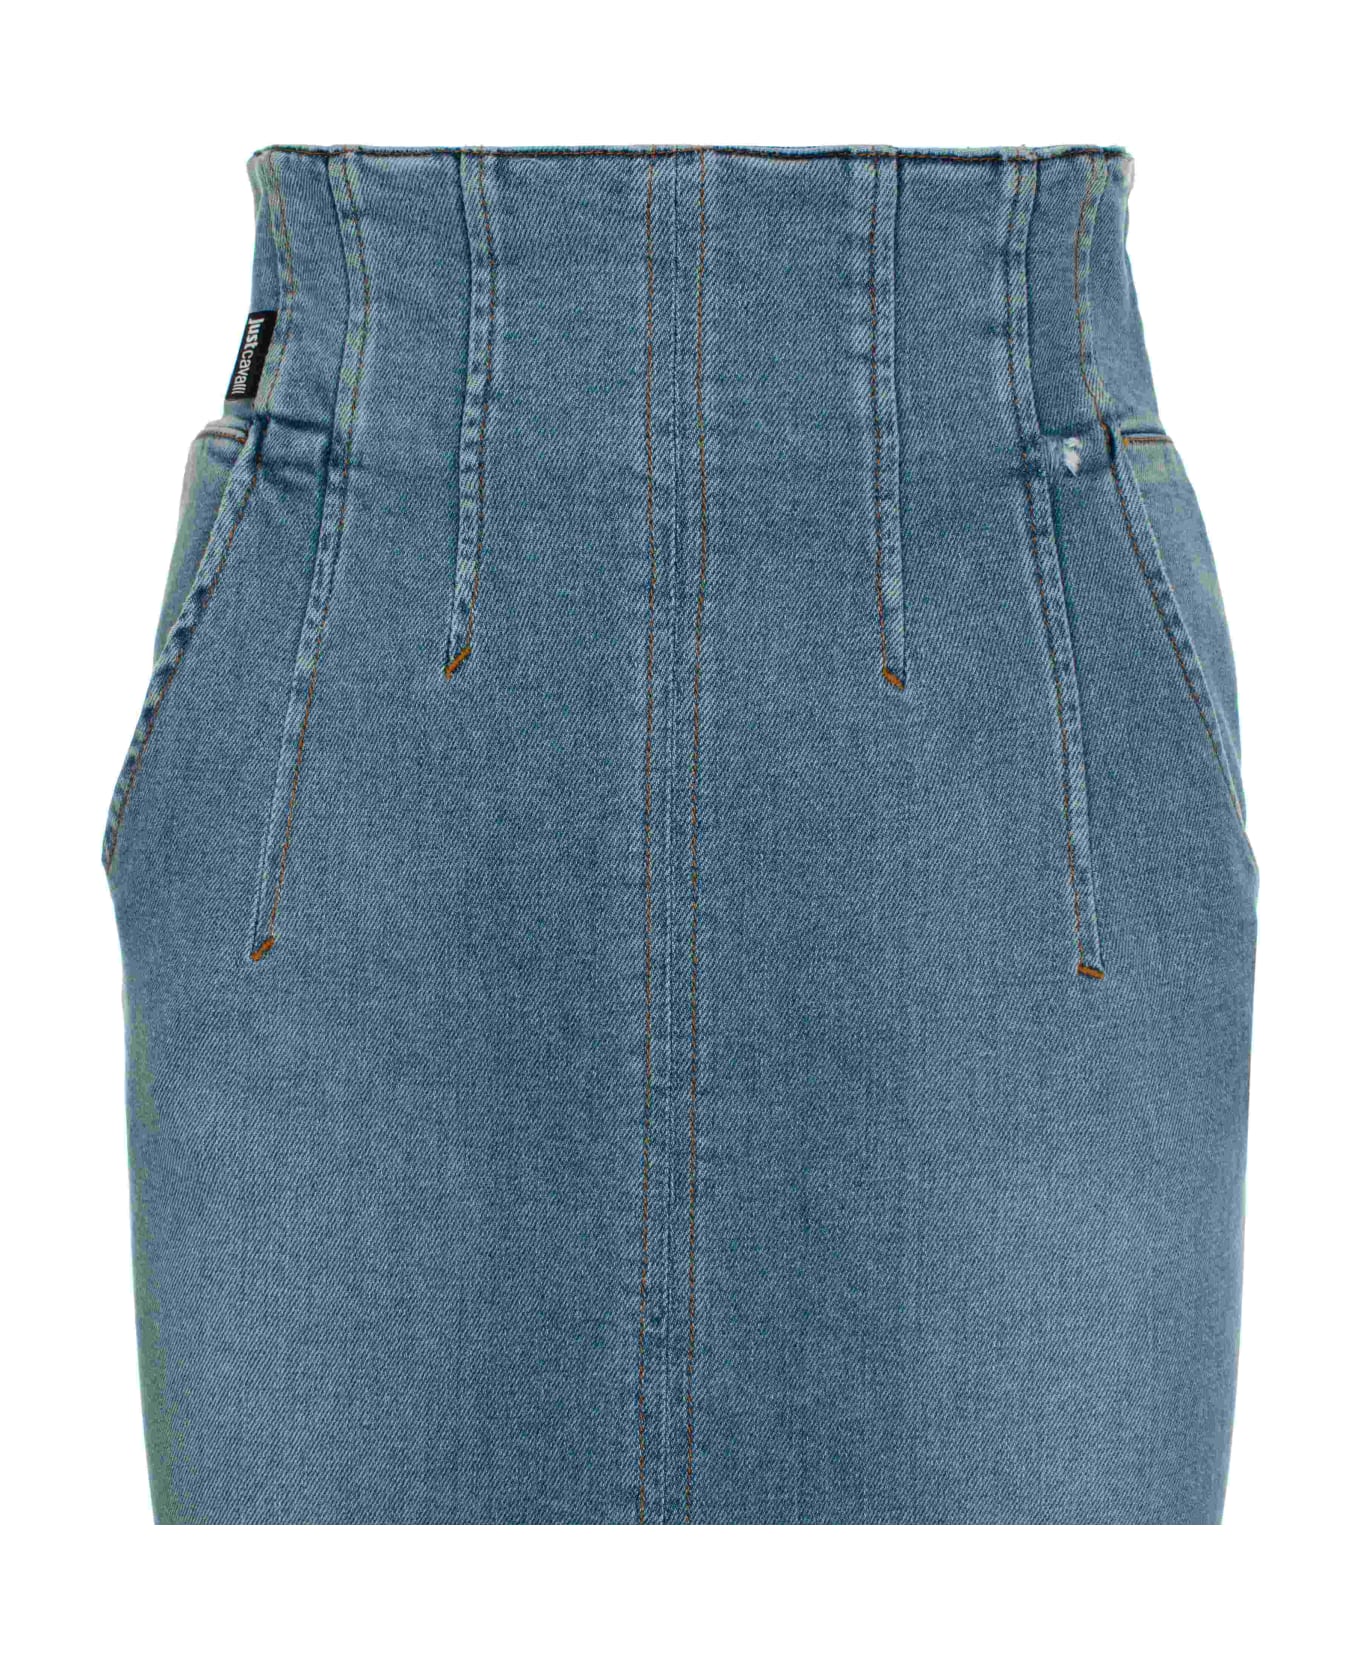 Just Cavalli Skirt - Blue スカート